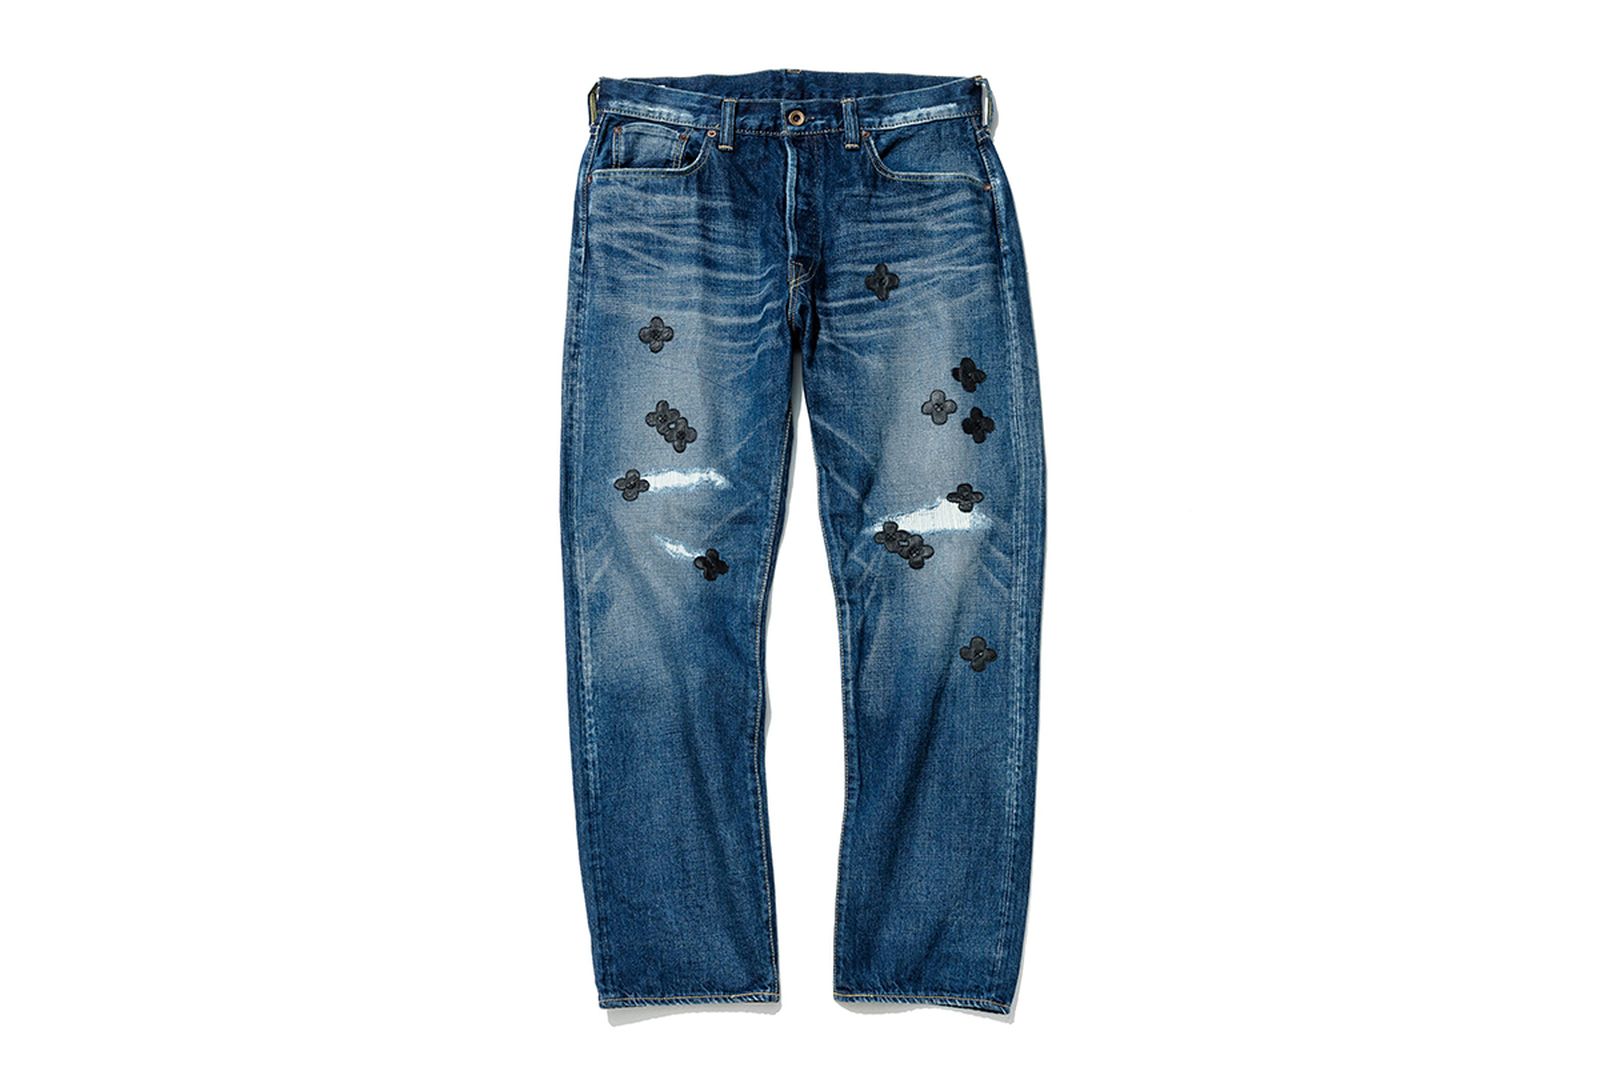 bru-na-boinne-leather-patch-jeans- (2)